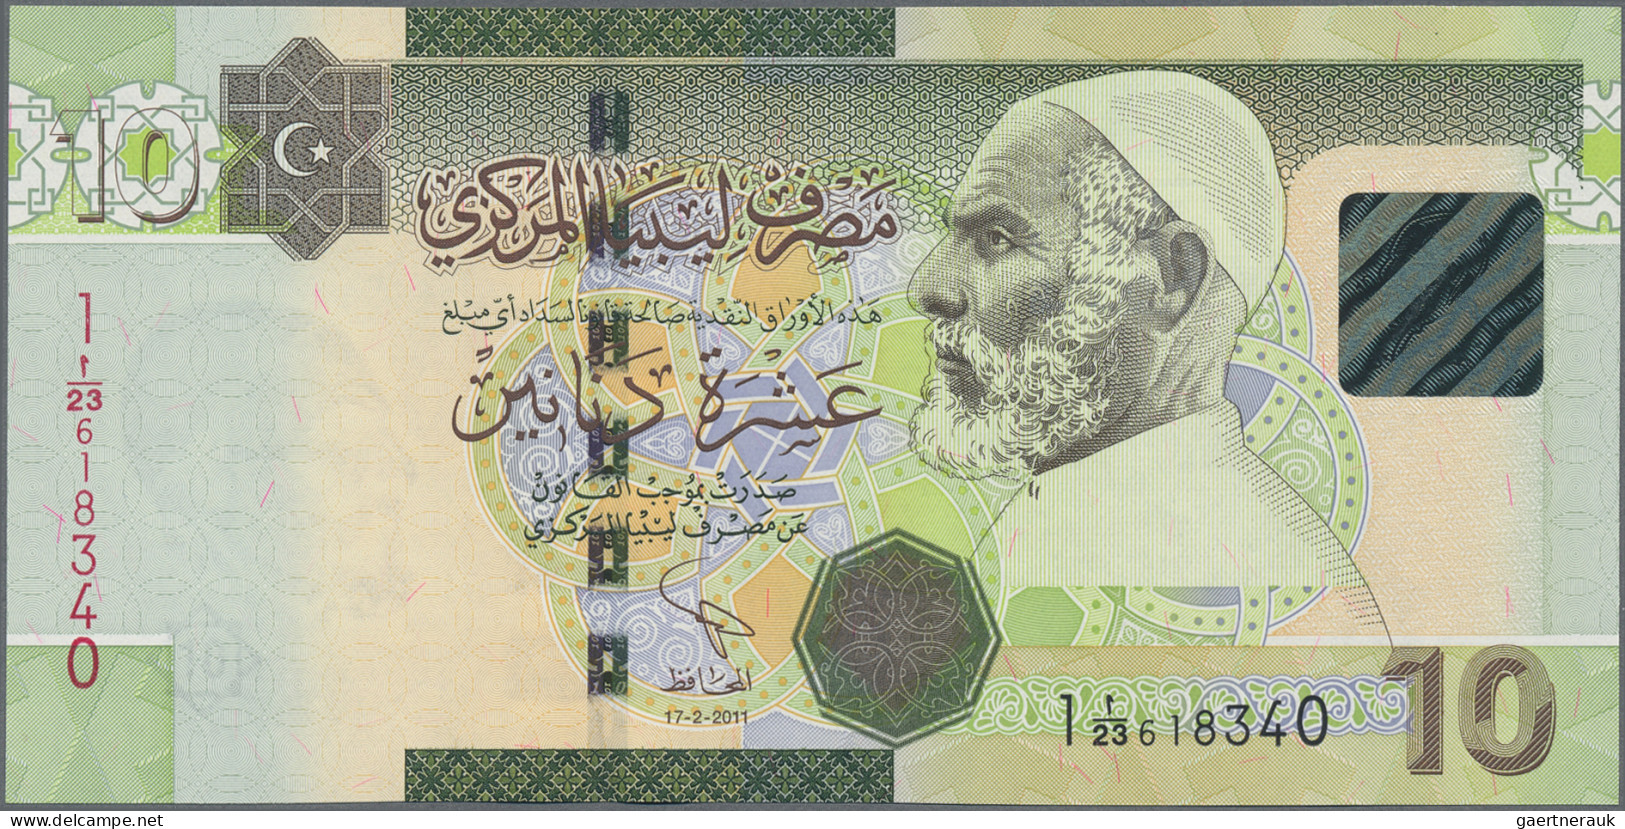 Libya: Central Bank Of Libya, Huge Lot With 34 Banknotes, Series 1981-2015, Comp - Libyen